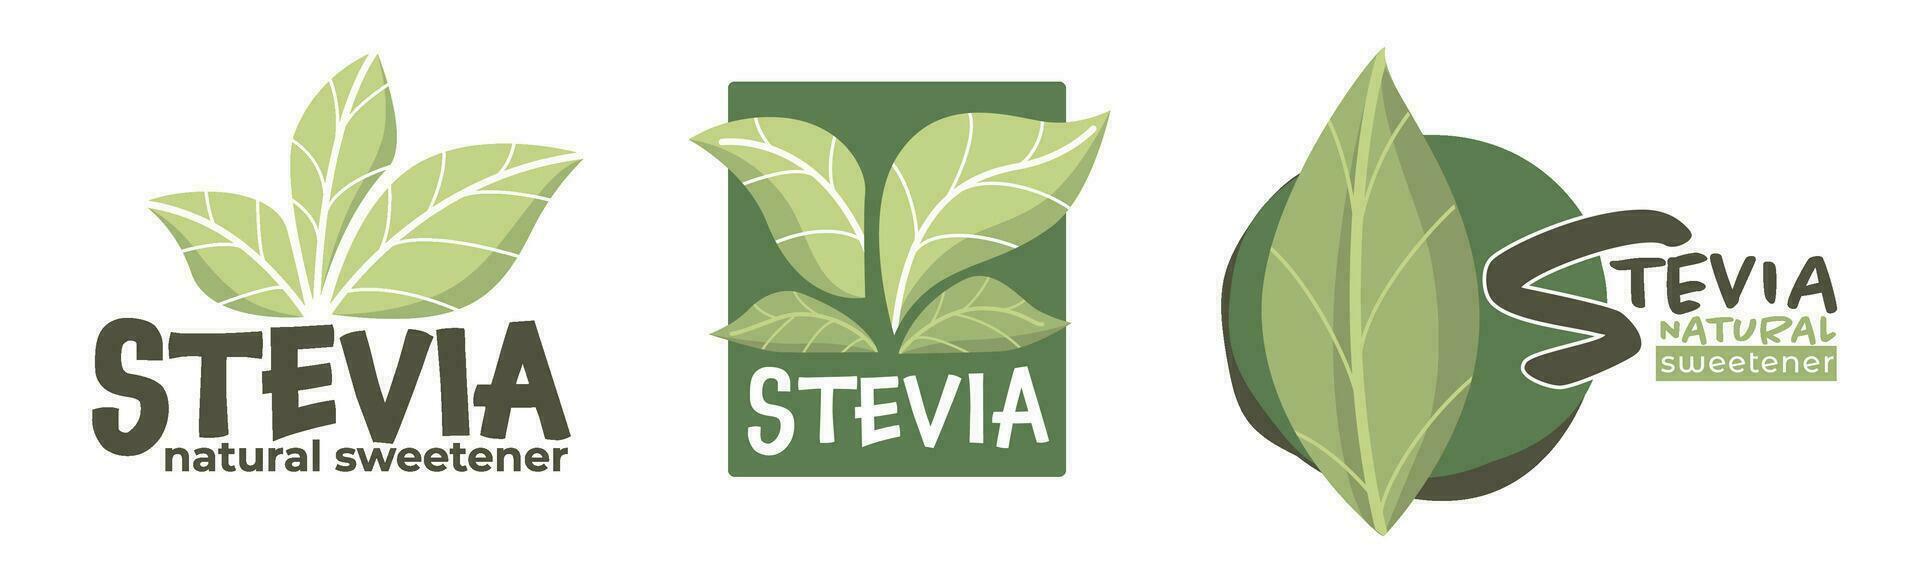 natural edulcorante alternativa, stevia hojas eco vector